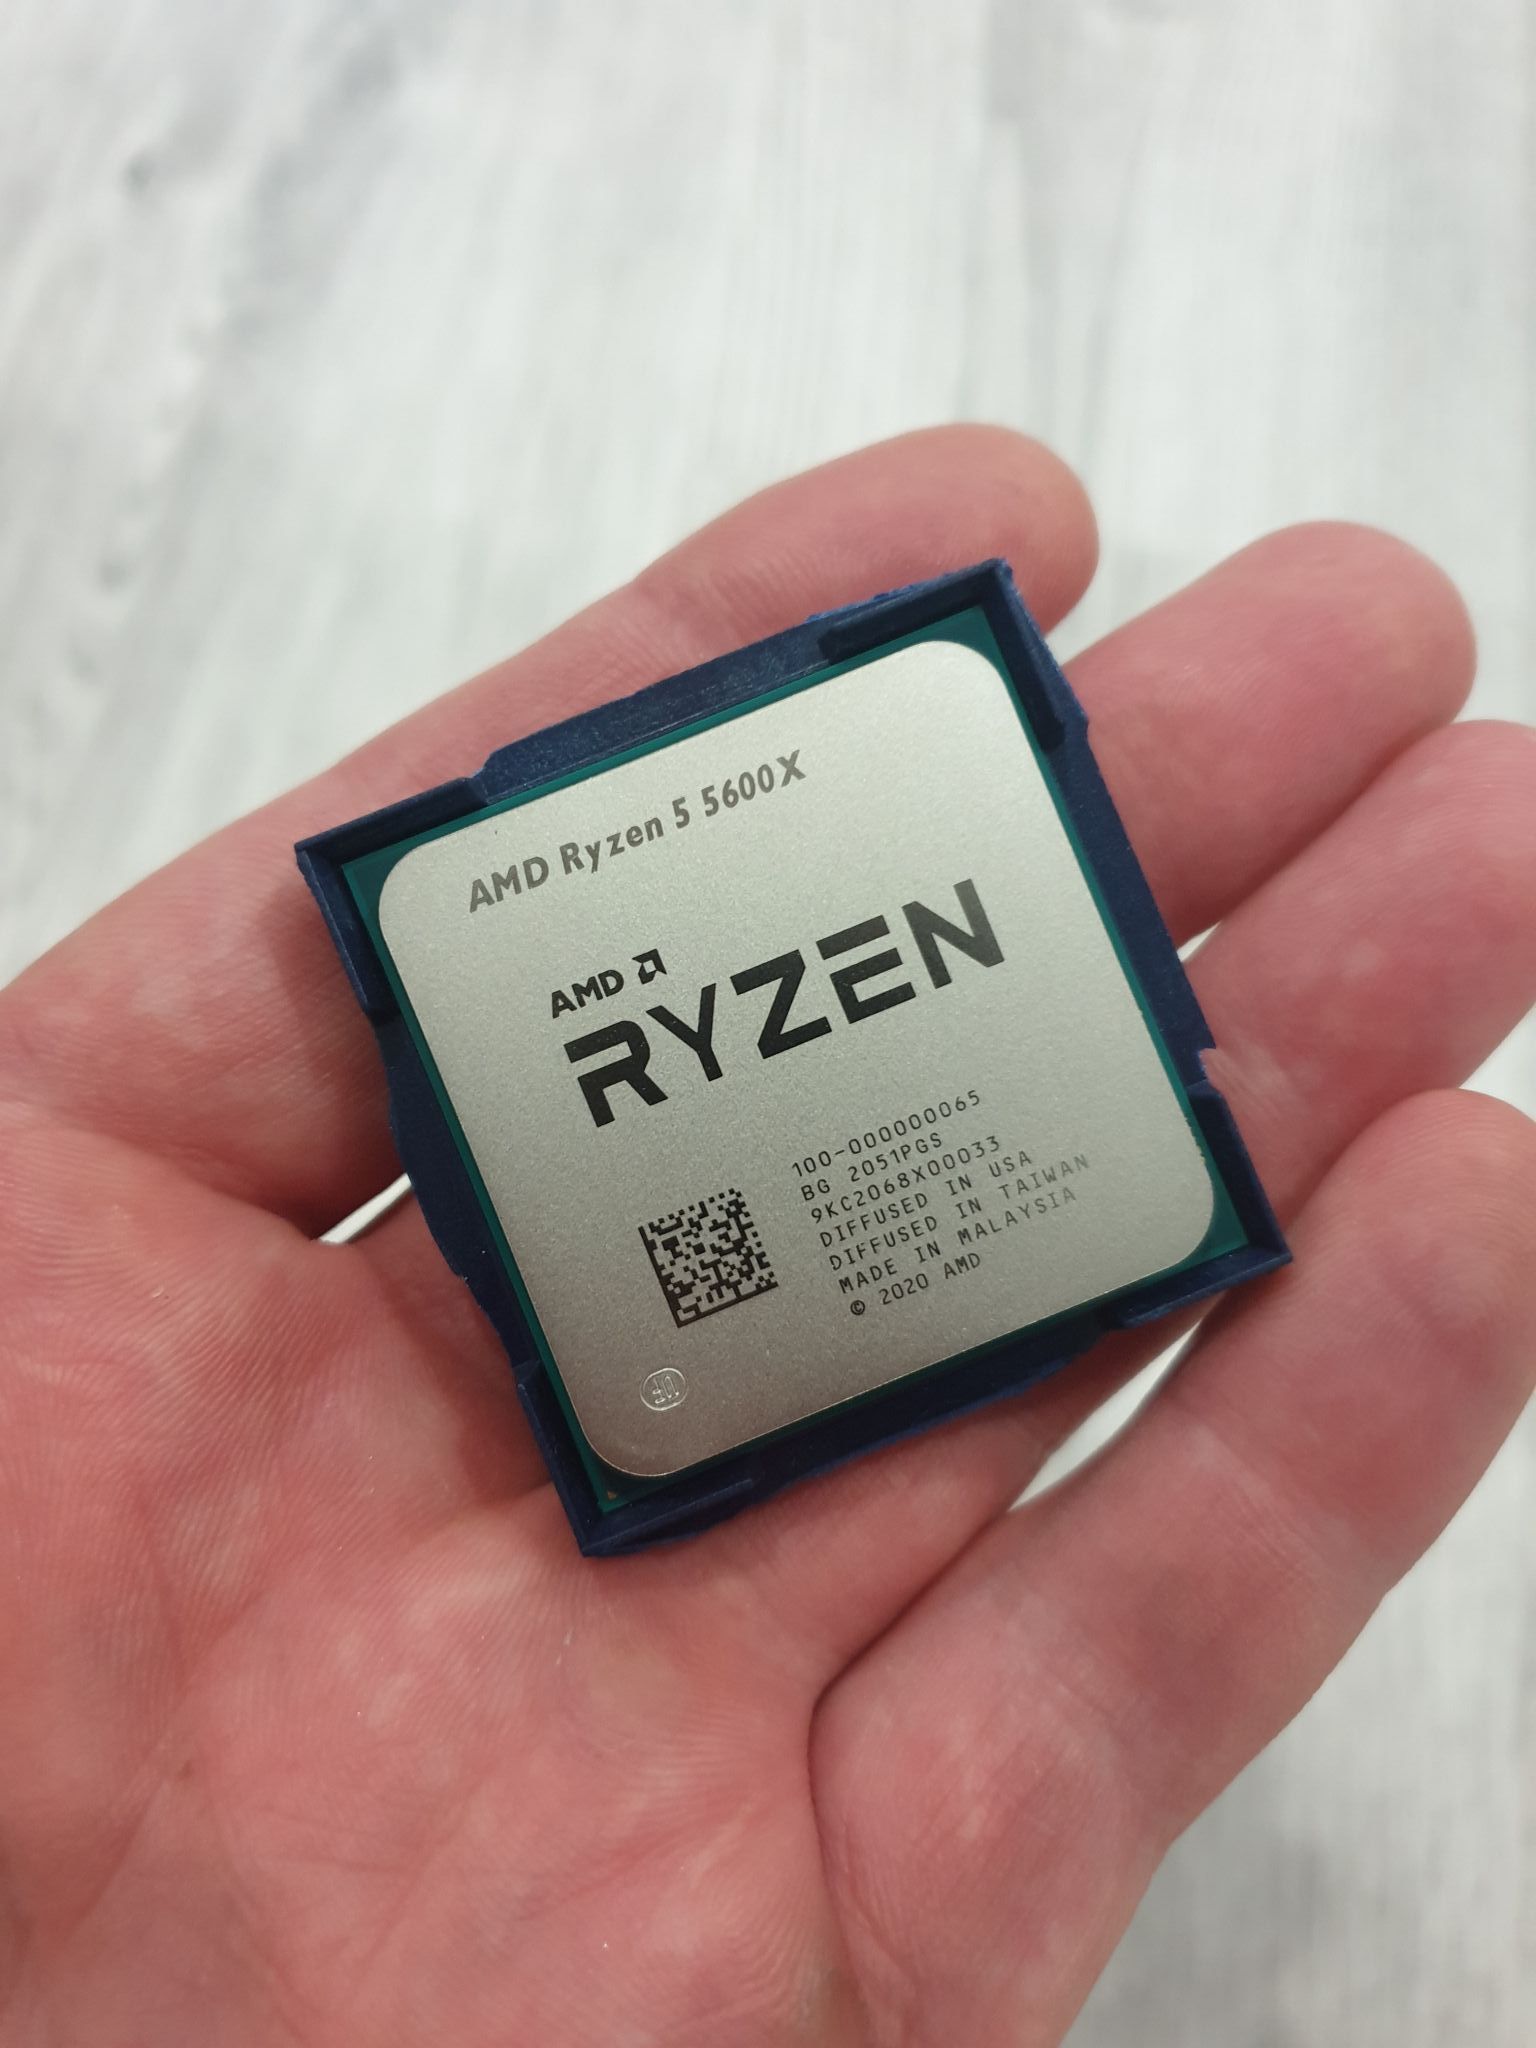 5 5600 сокет. Ryzen 5 5600. Процессор AMD Ryzen 5 5600x. Ryzen 5600 Socket. Сокет для Ryzen 5600x.